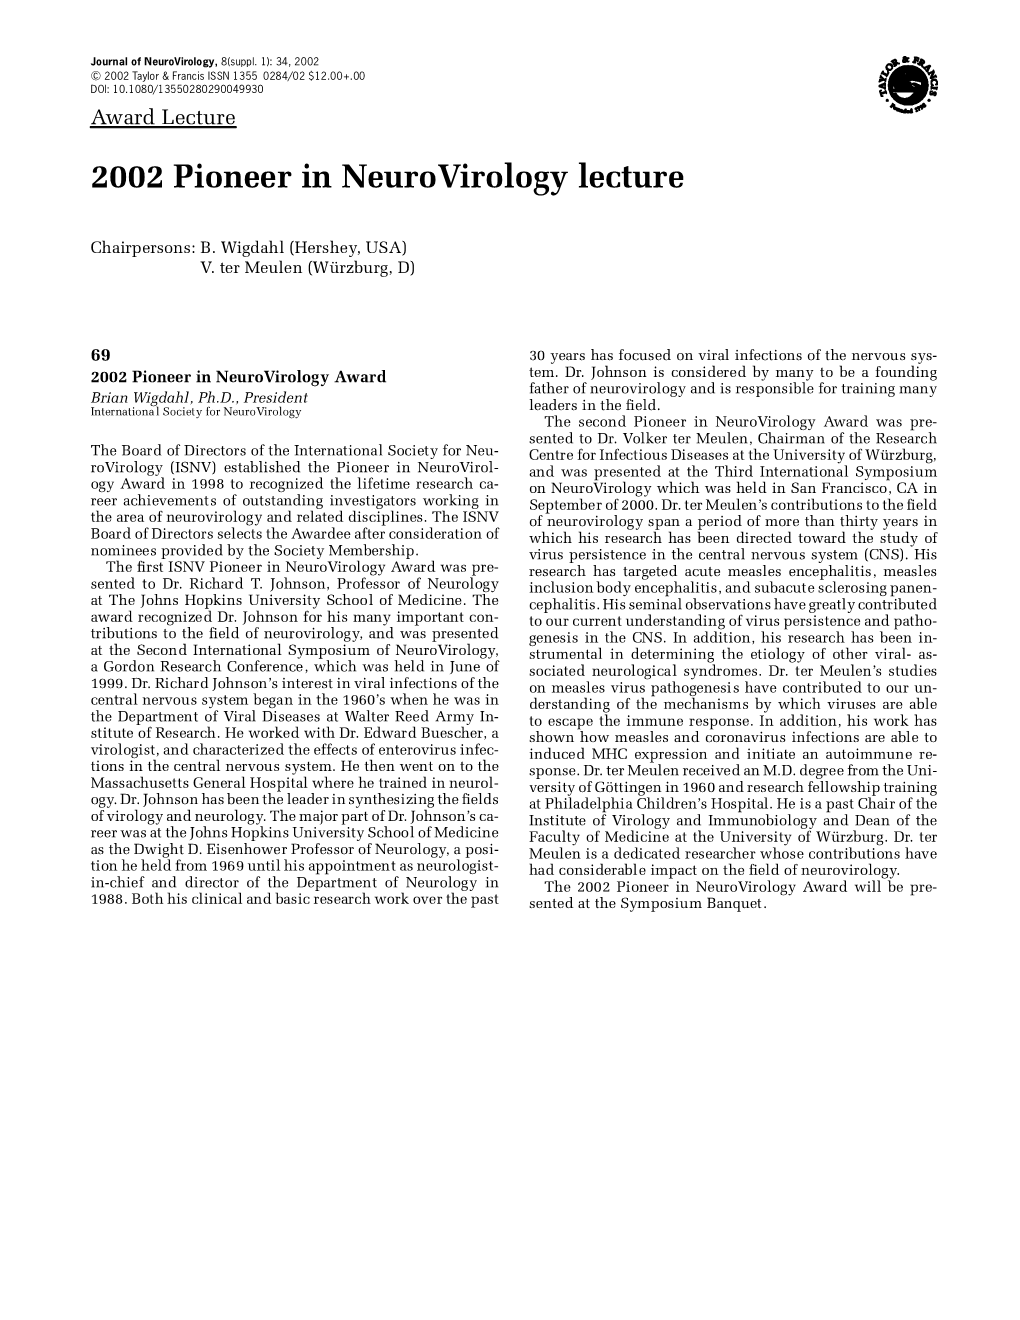 2002 Pioneer in Neurovirology Lecture